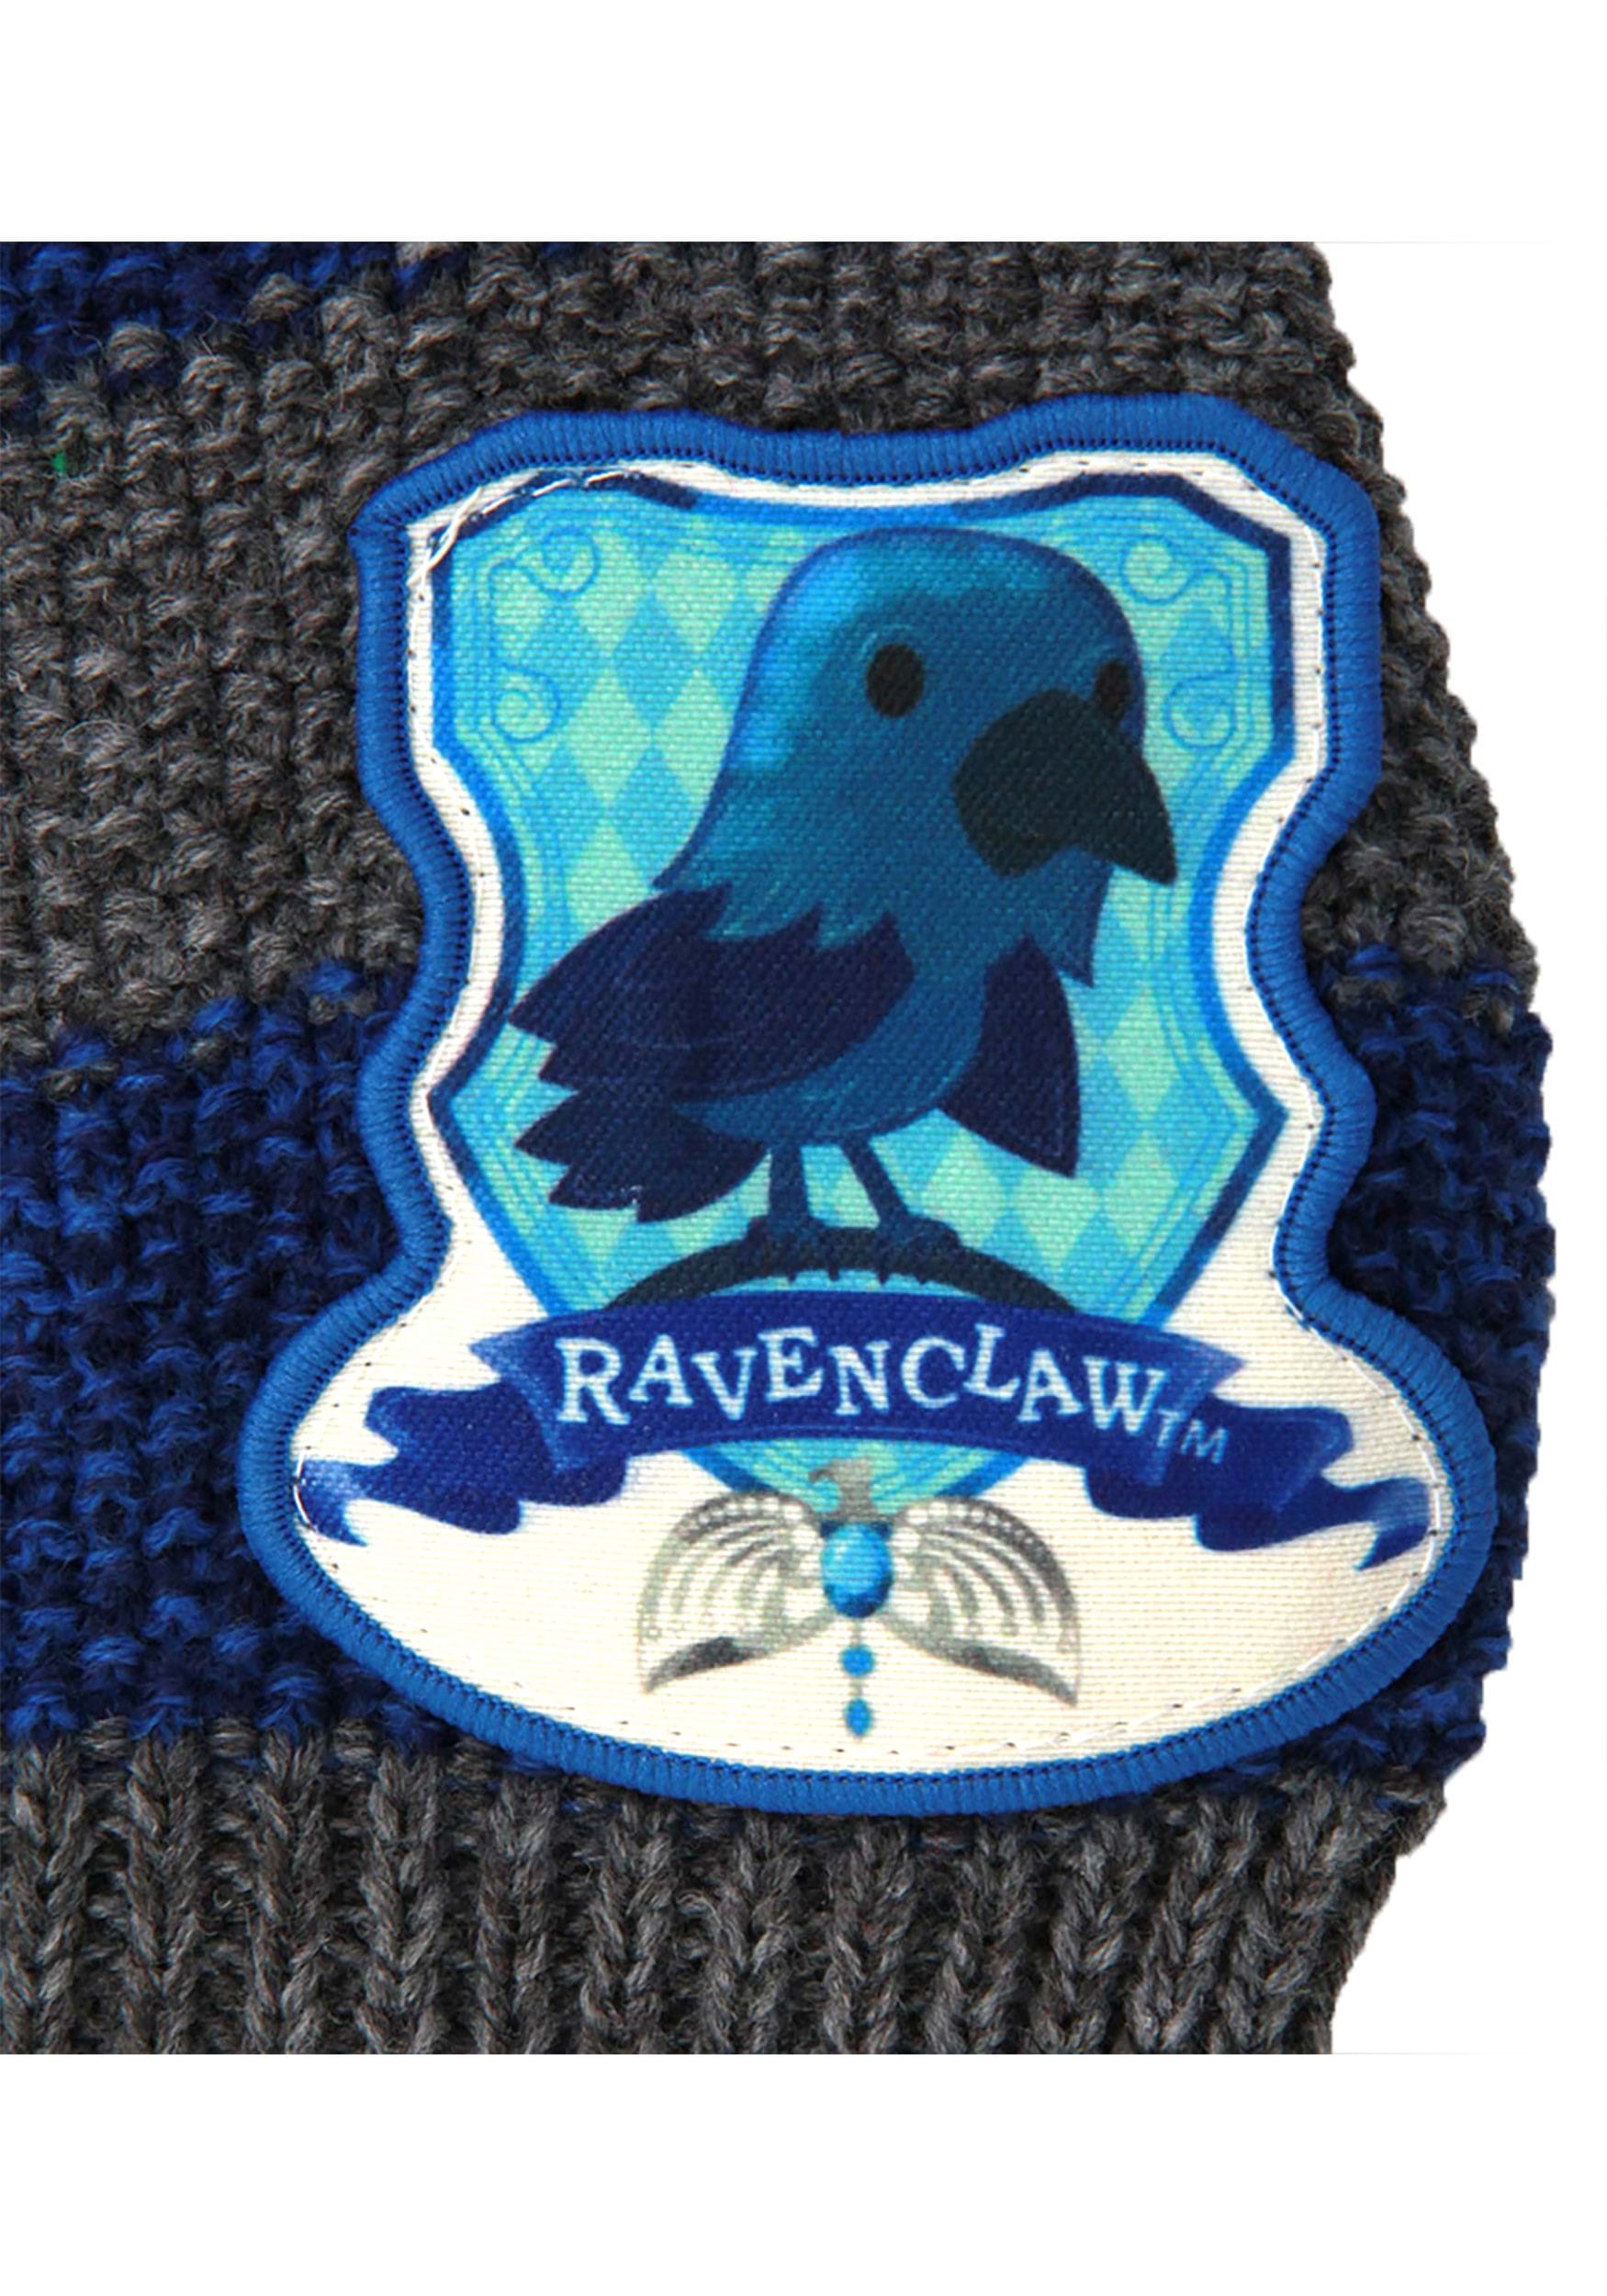 Ravenclaw Toddler Knit Warm Beanie